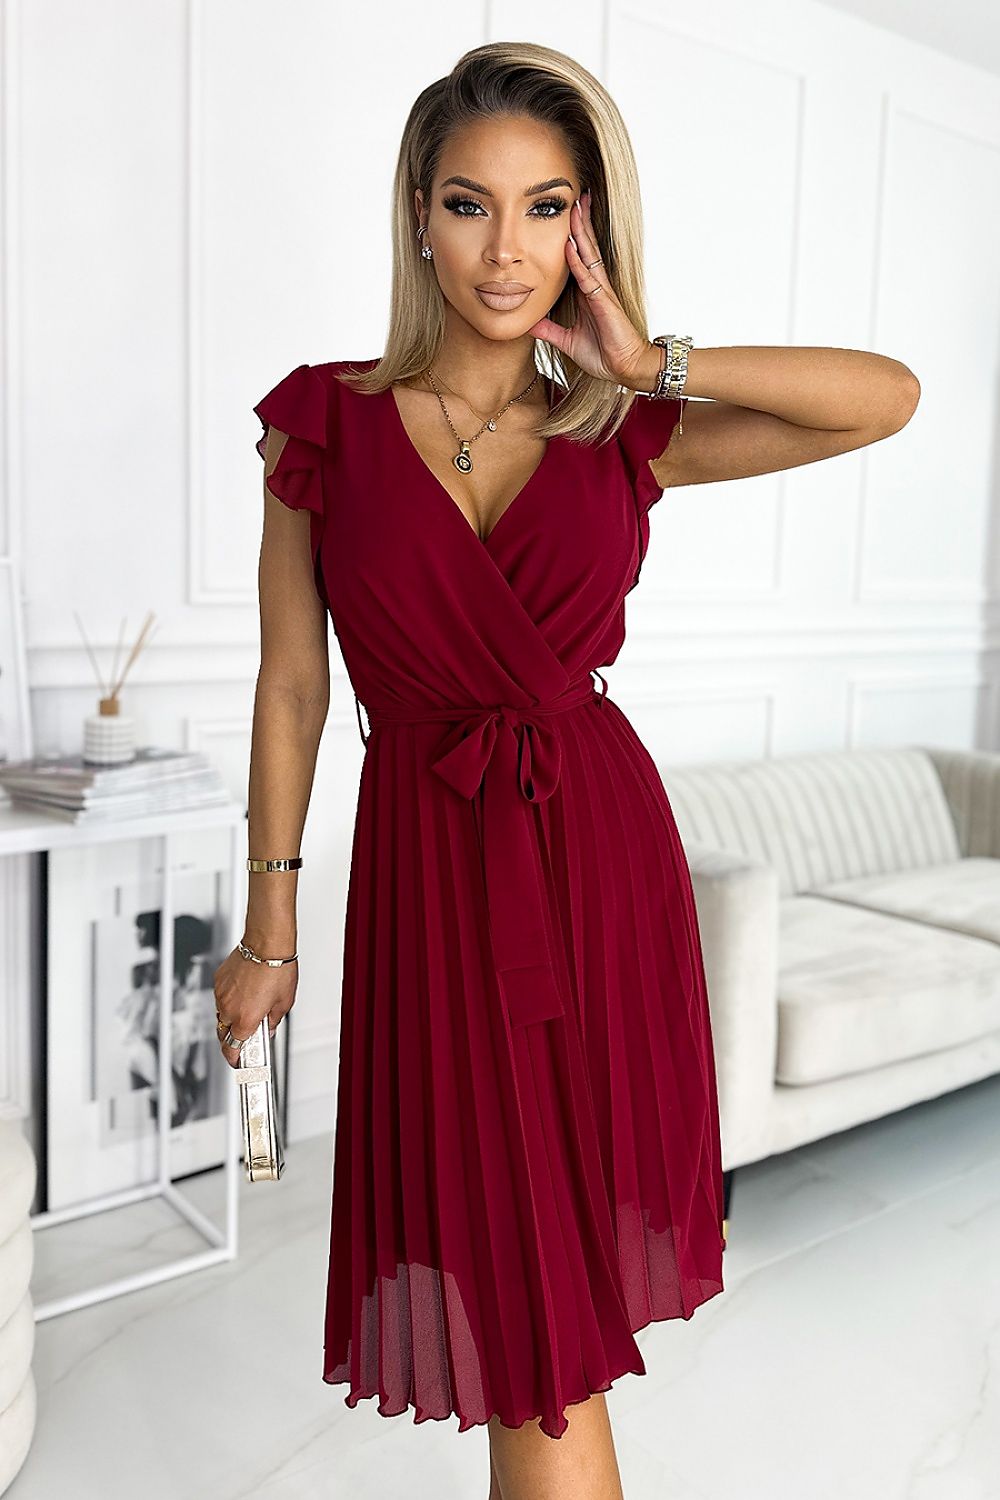 Fashionista Chiffon Burgundy Dress